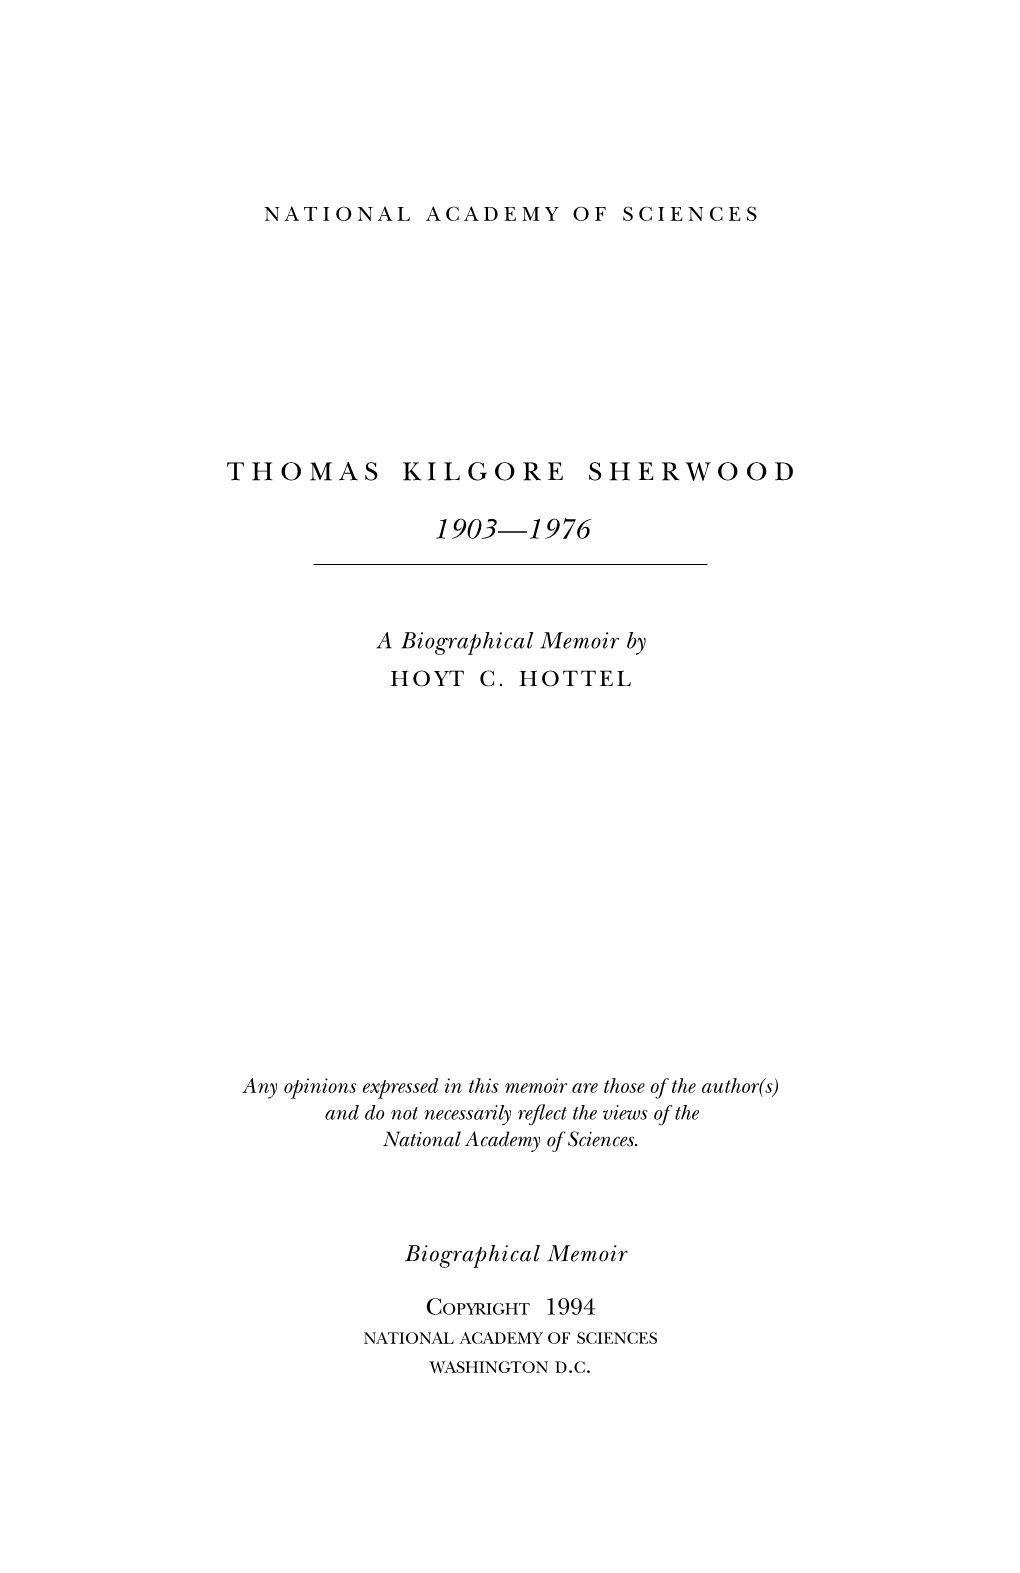 THOMAS KILGORE SHERWOOD July 25, 1903-January 14, 1976